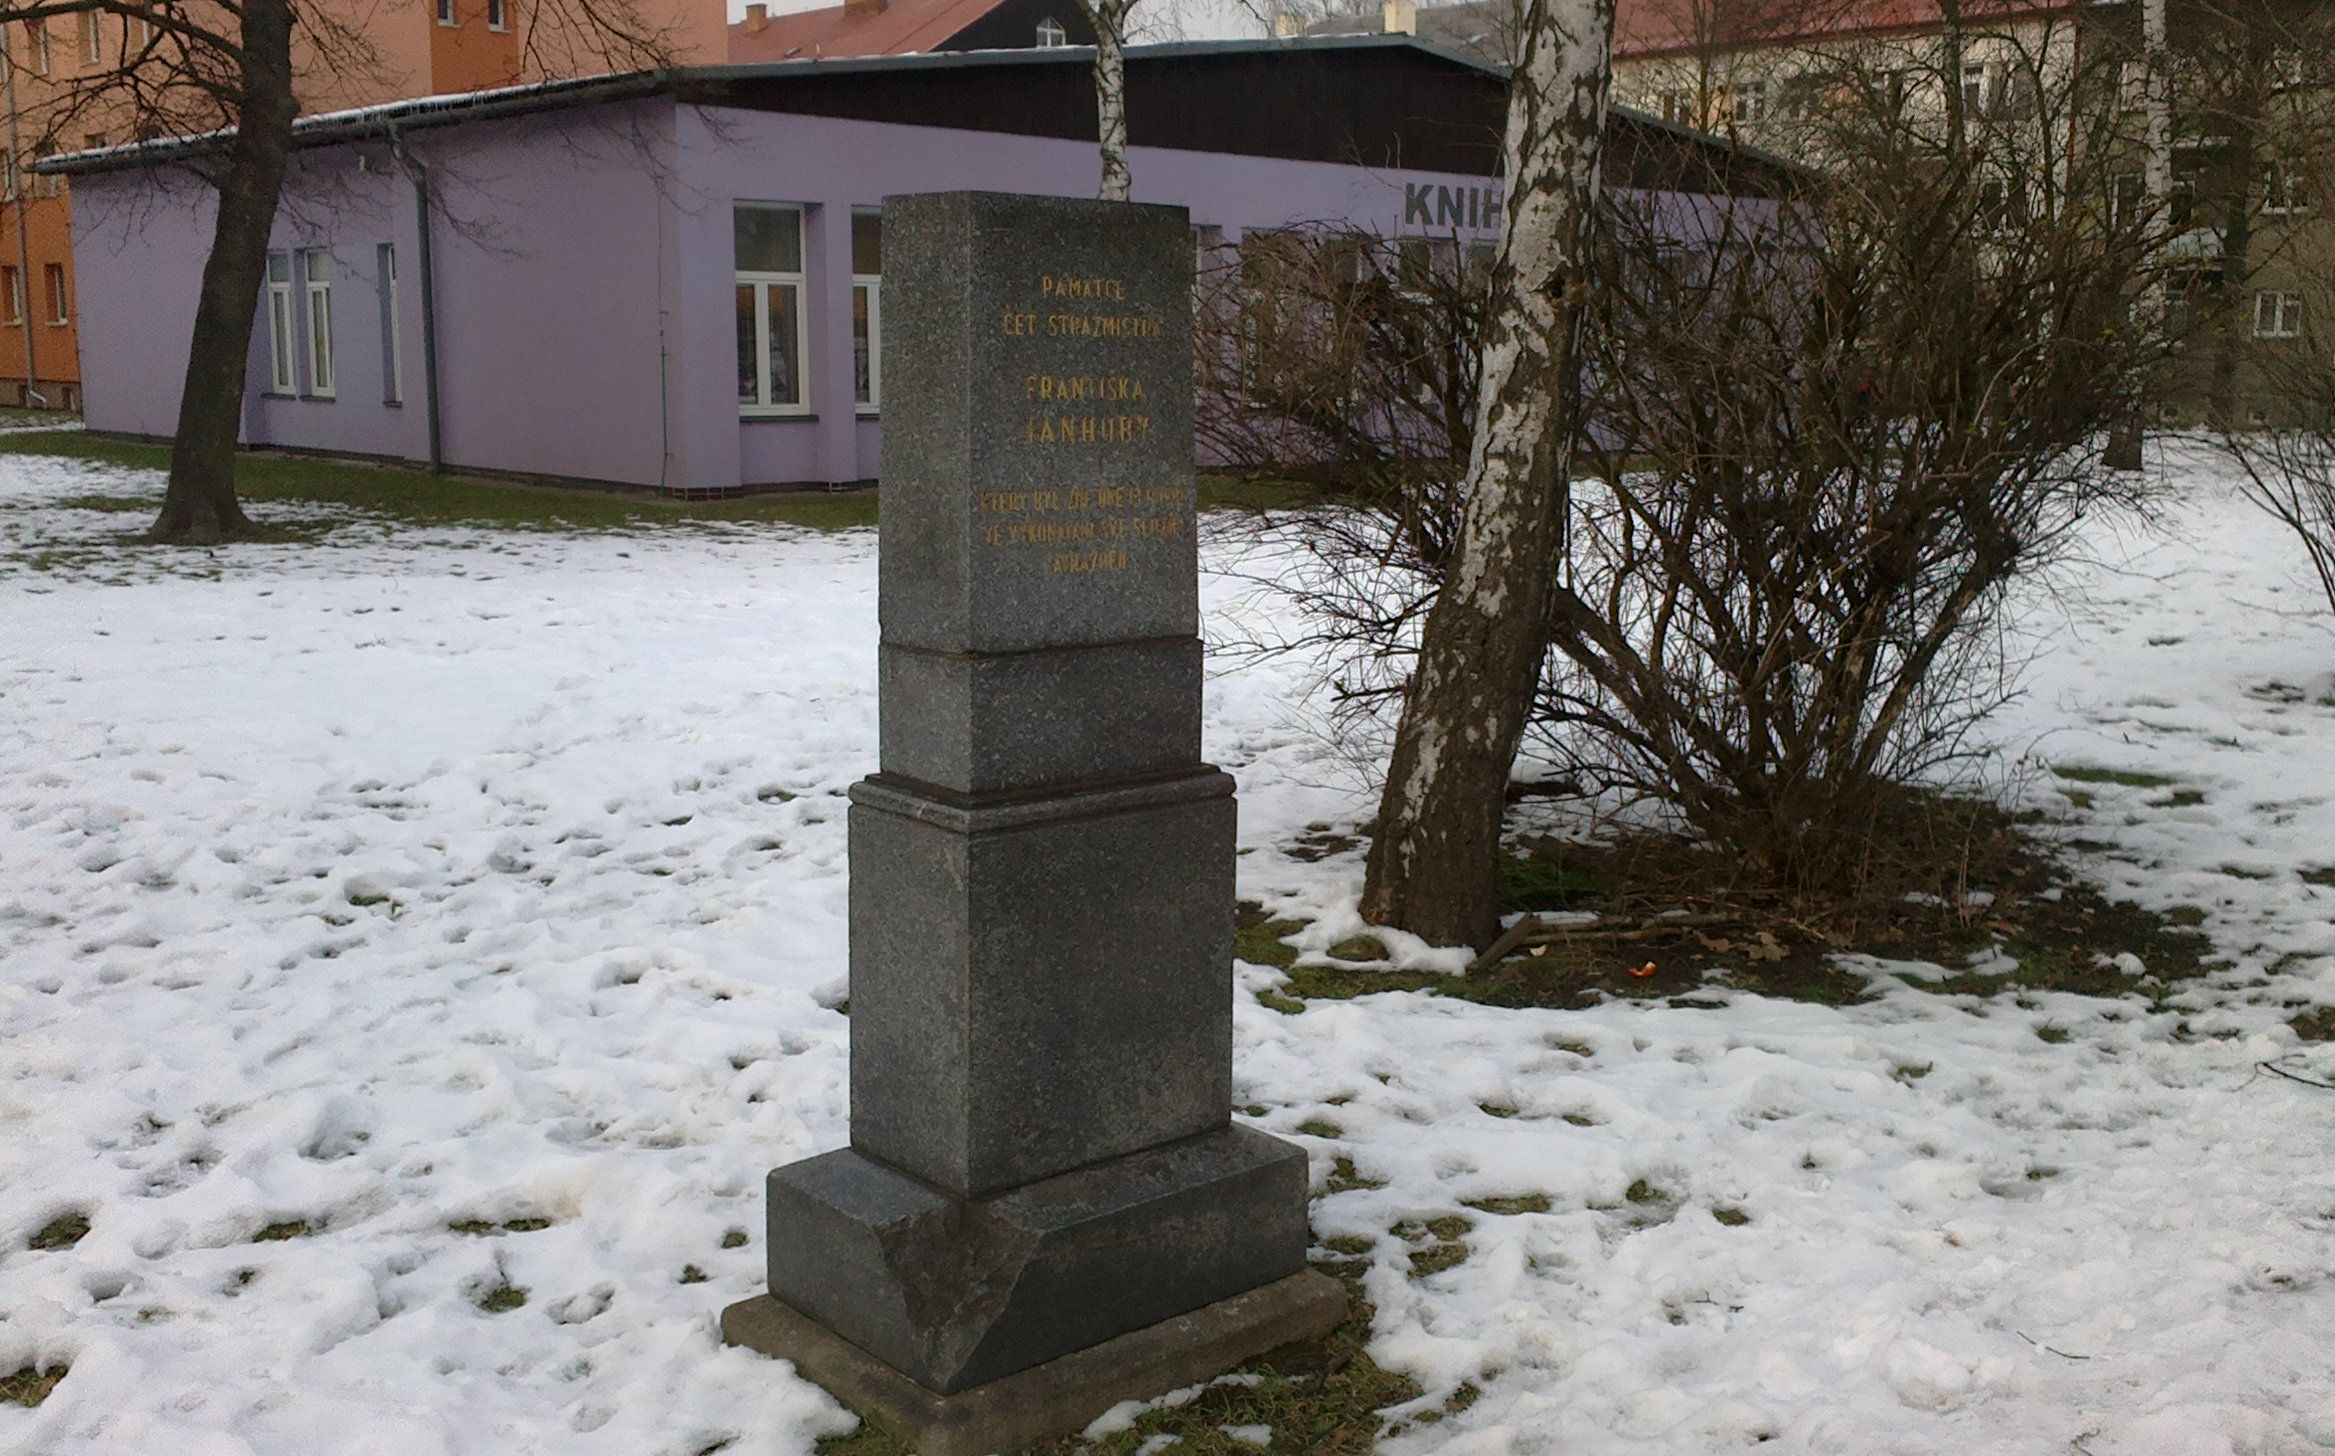 Památník Františka Janhuby